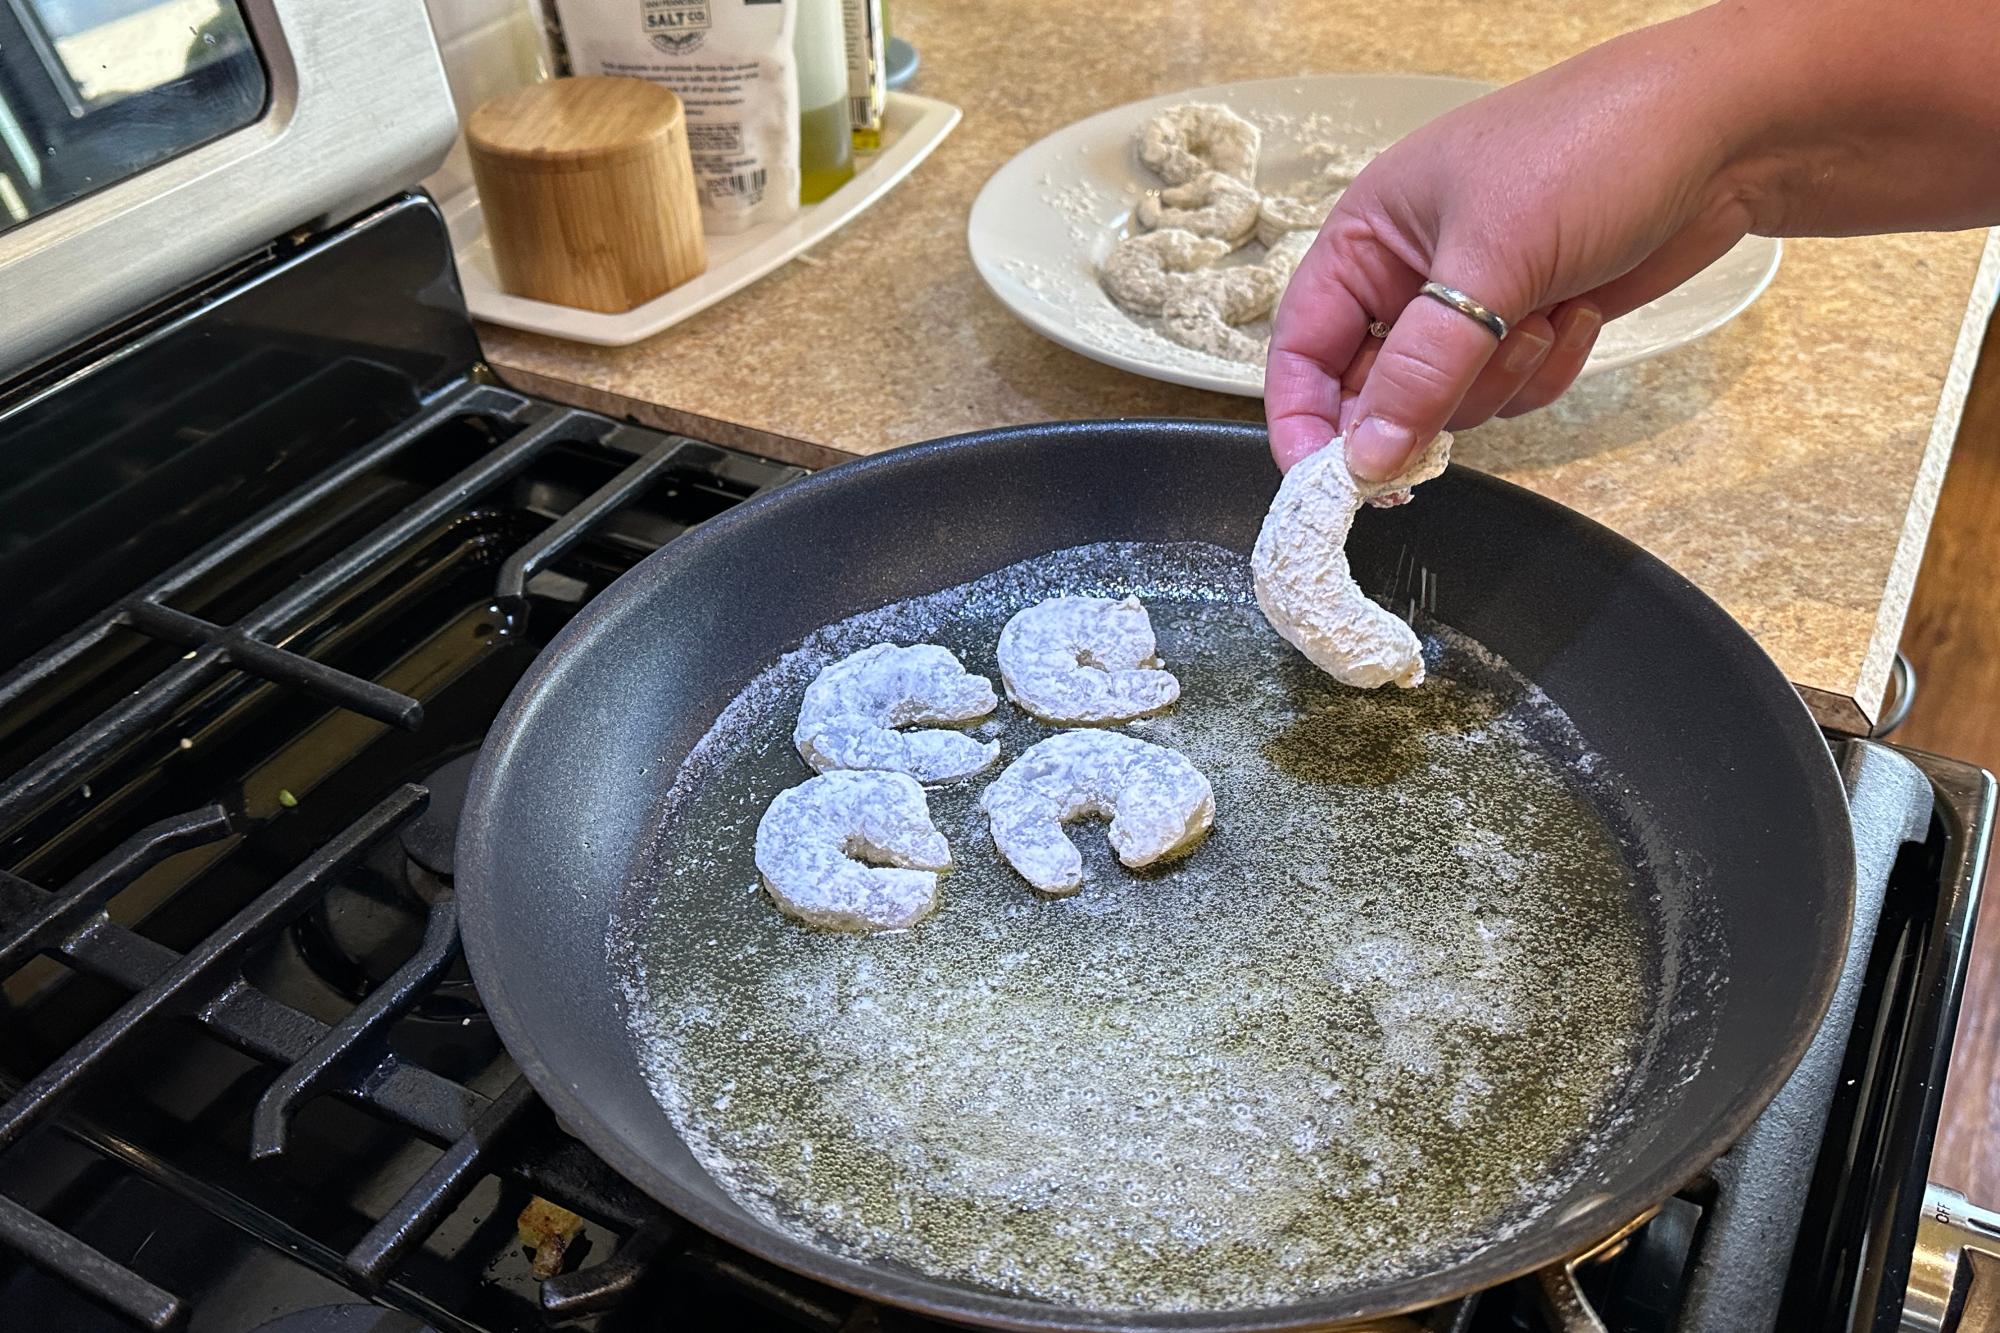 Placing shrimp in the pan.